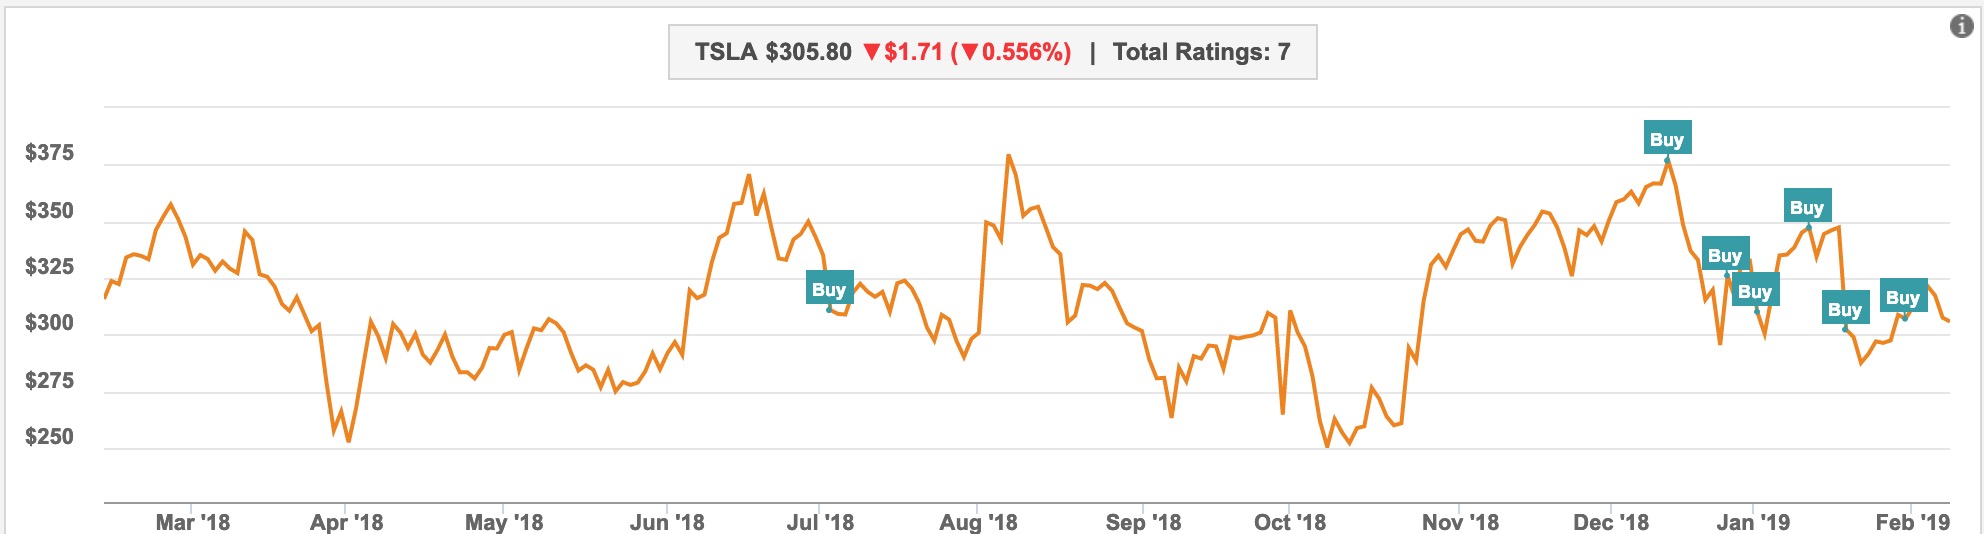 Tesla (TSLA) stock jumps on Wall Street seeing $35,000 ...